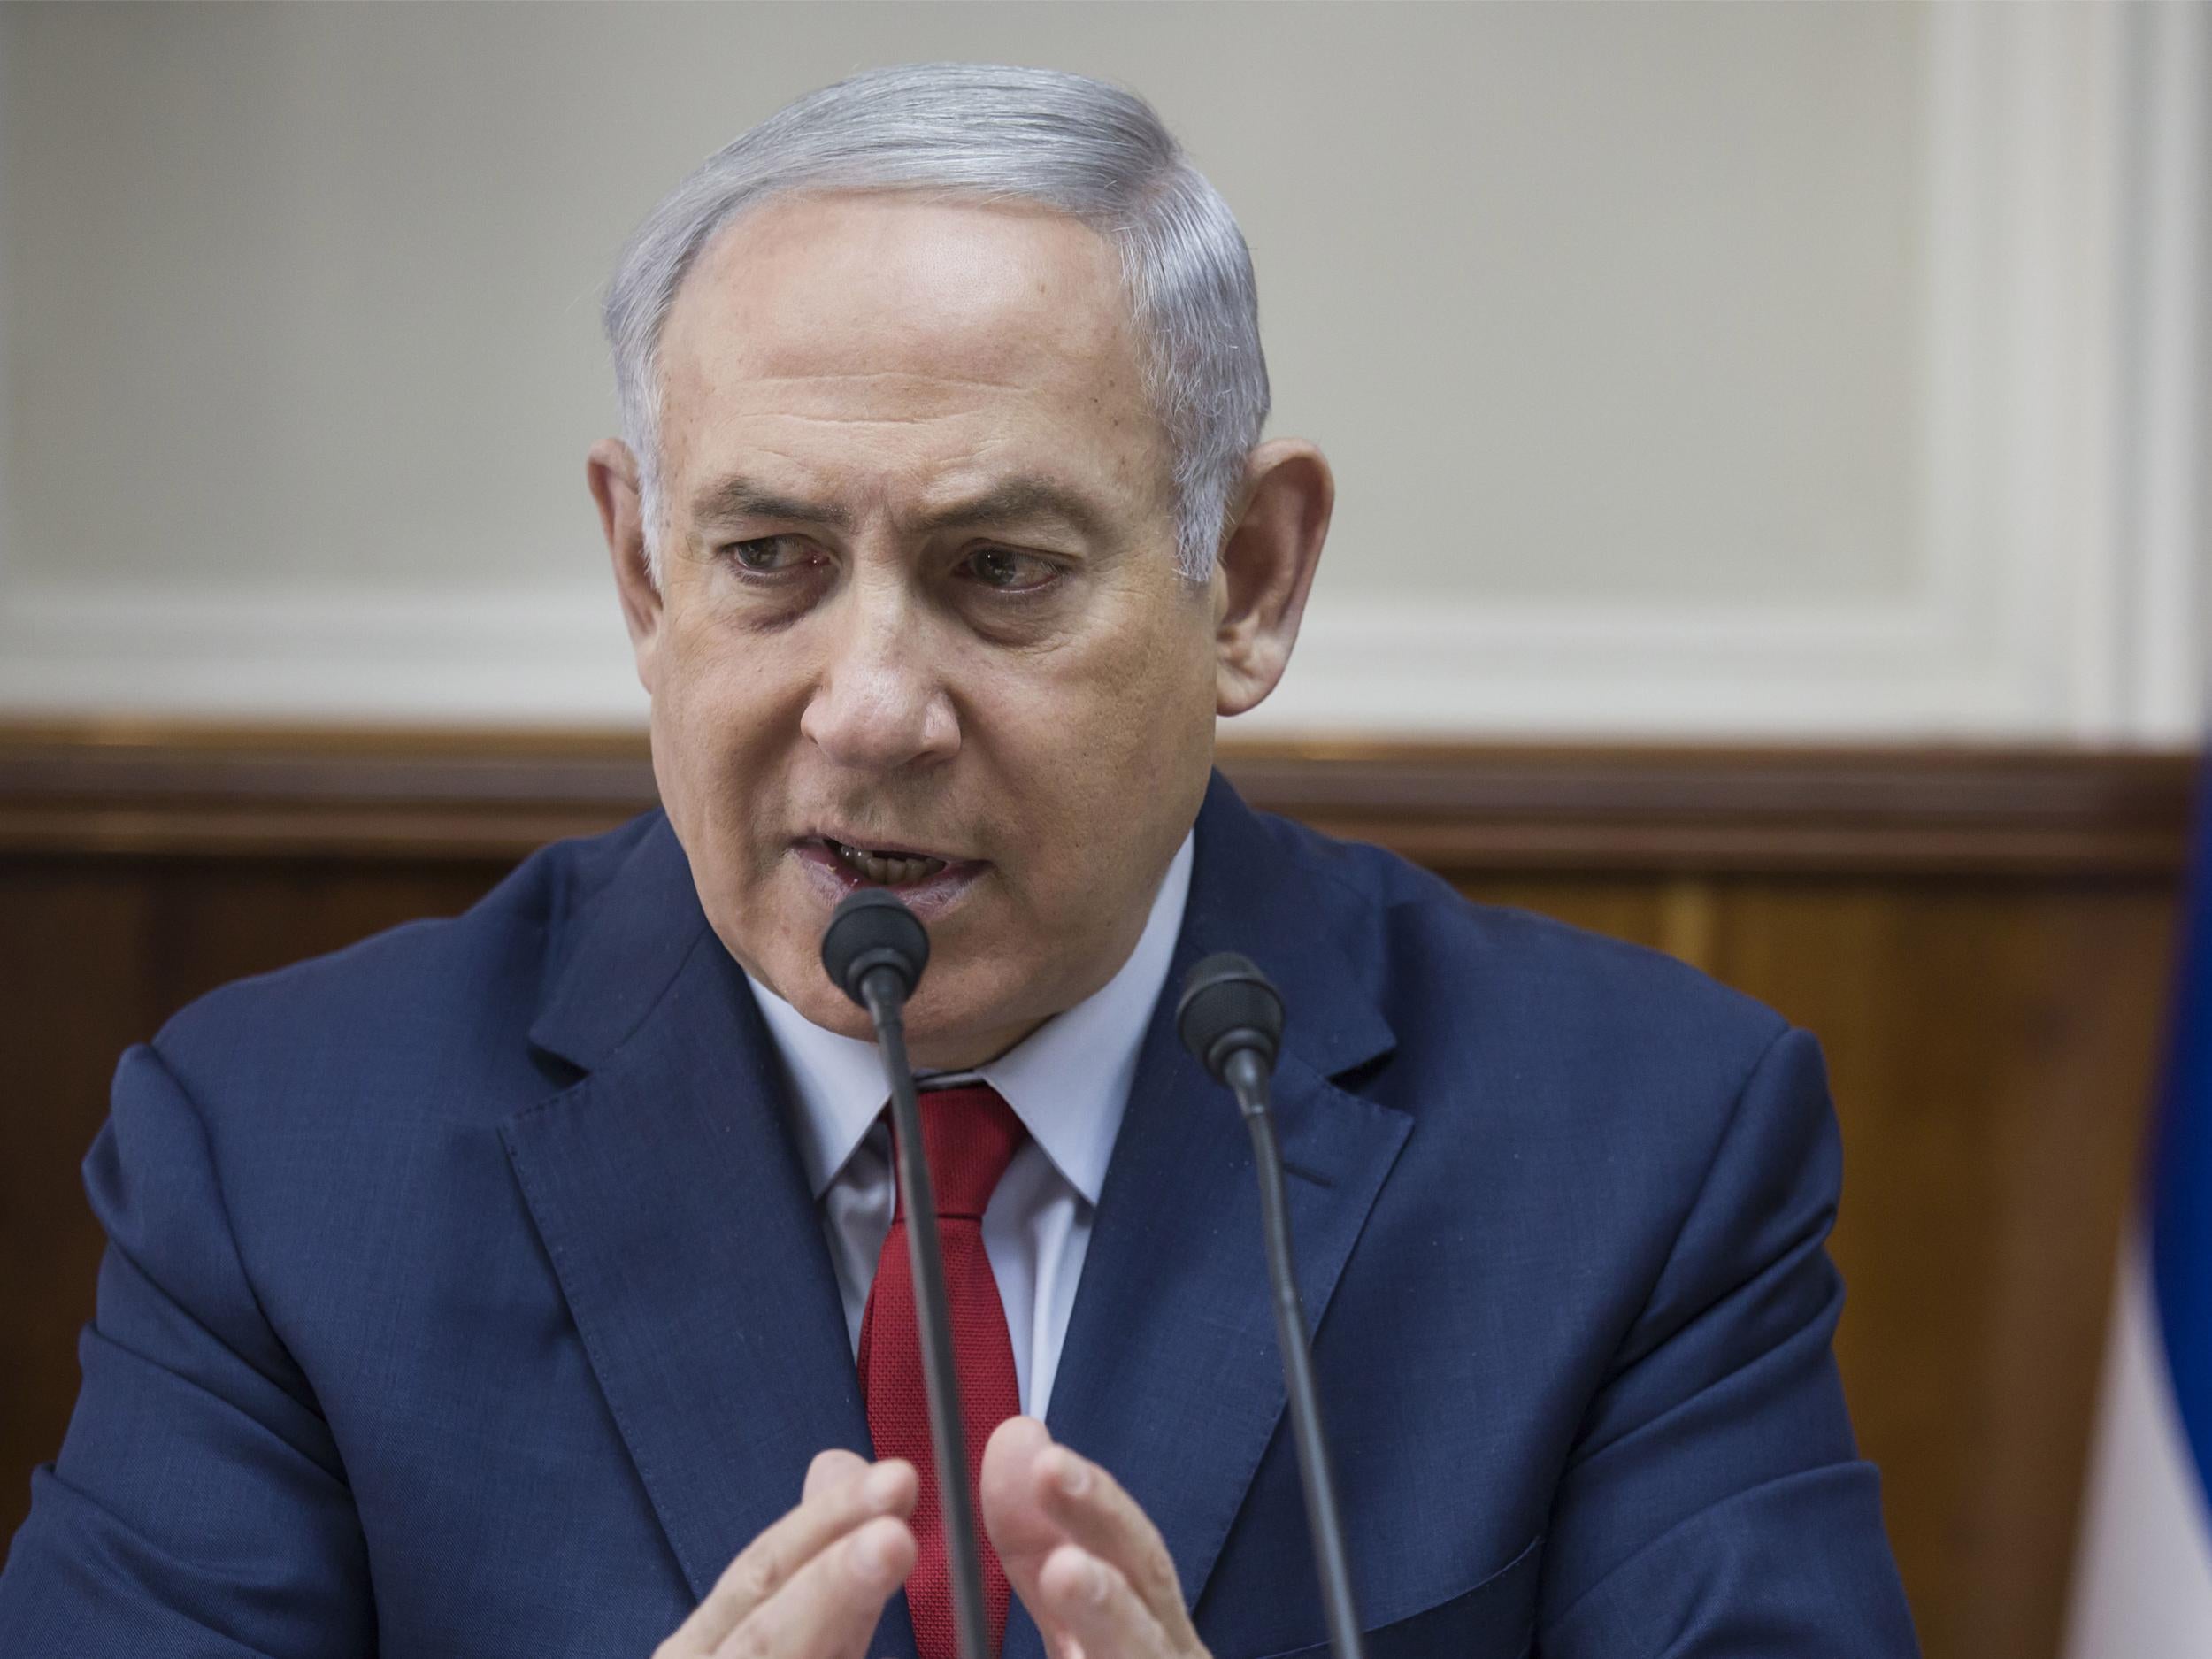 Israeli Prime Minister Benjamin Netanyahu attends a cabinet meeting in Jerusalem